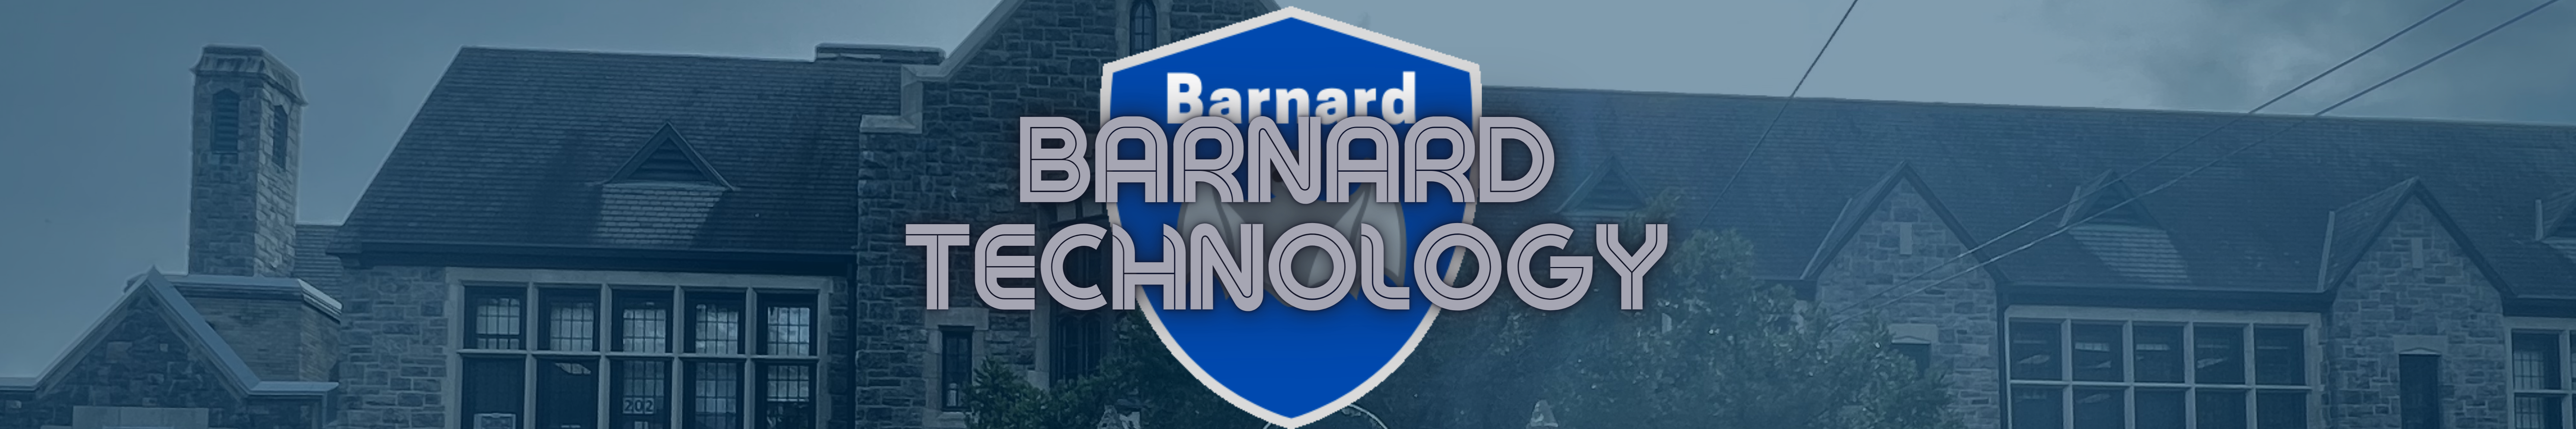 Barnard Technology banner